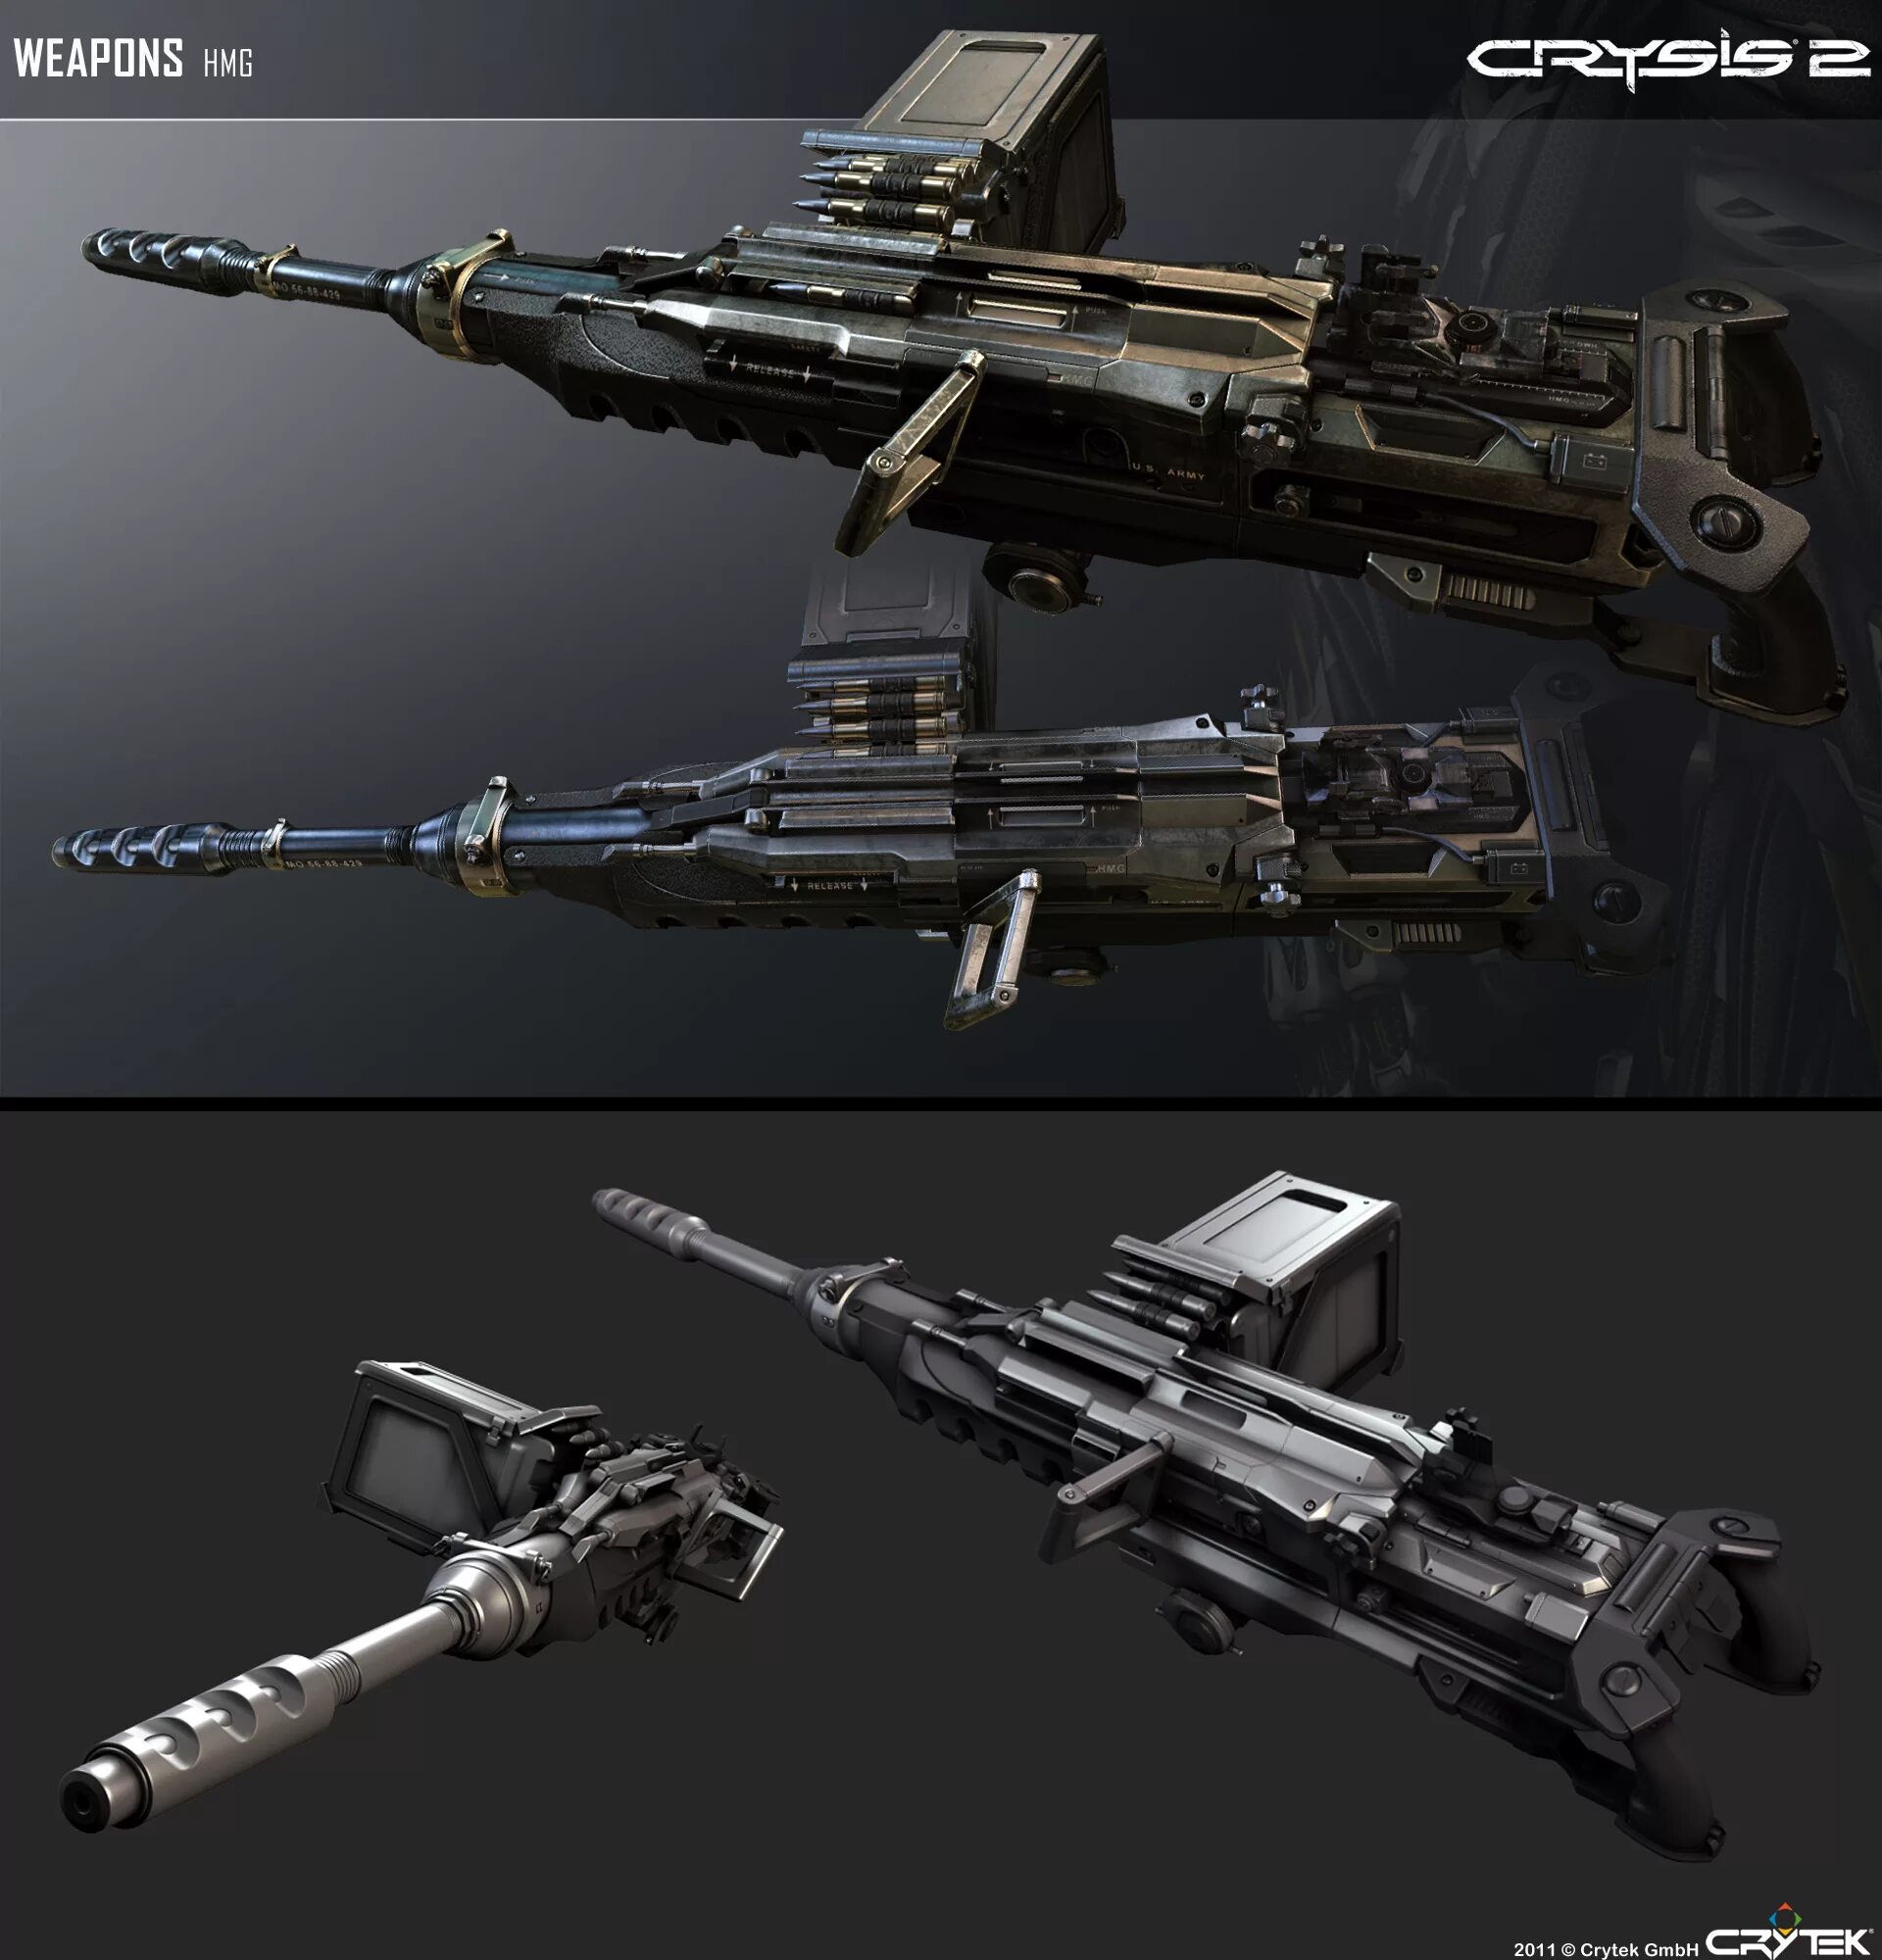 Крайзис 2 оружие. Crysis 2 Weapons. Кризис 2 оружие пулемет. Крайзис 2 винтовка. Crysis оружие